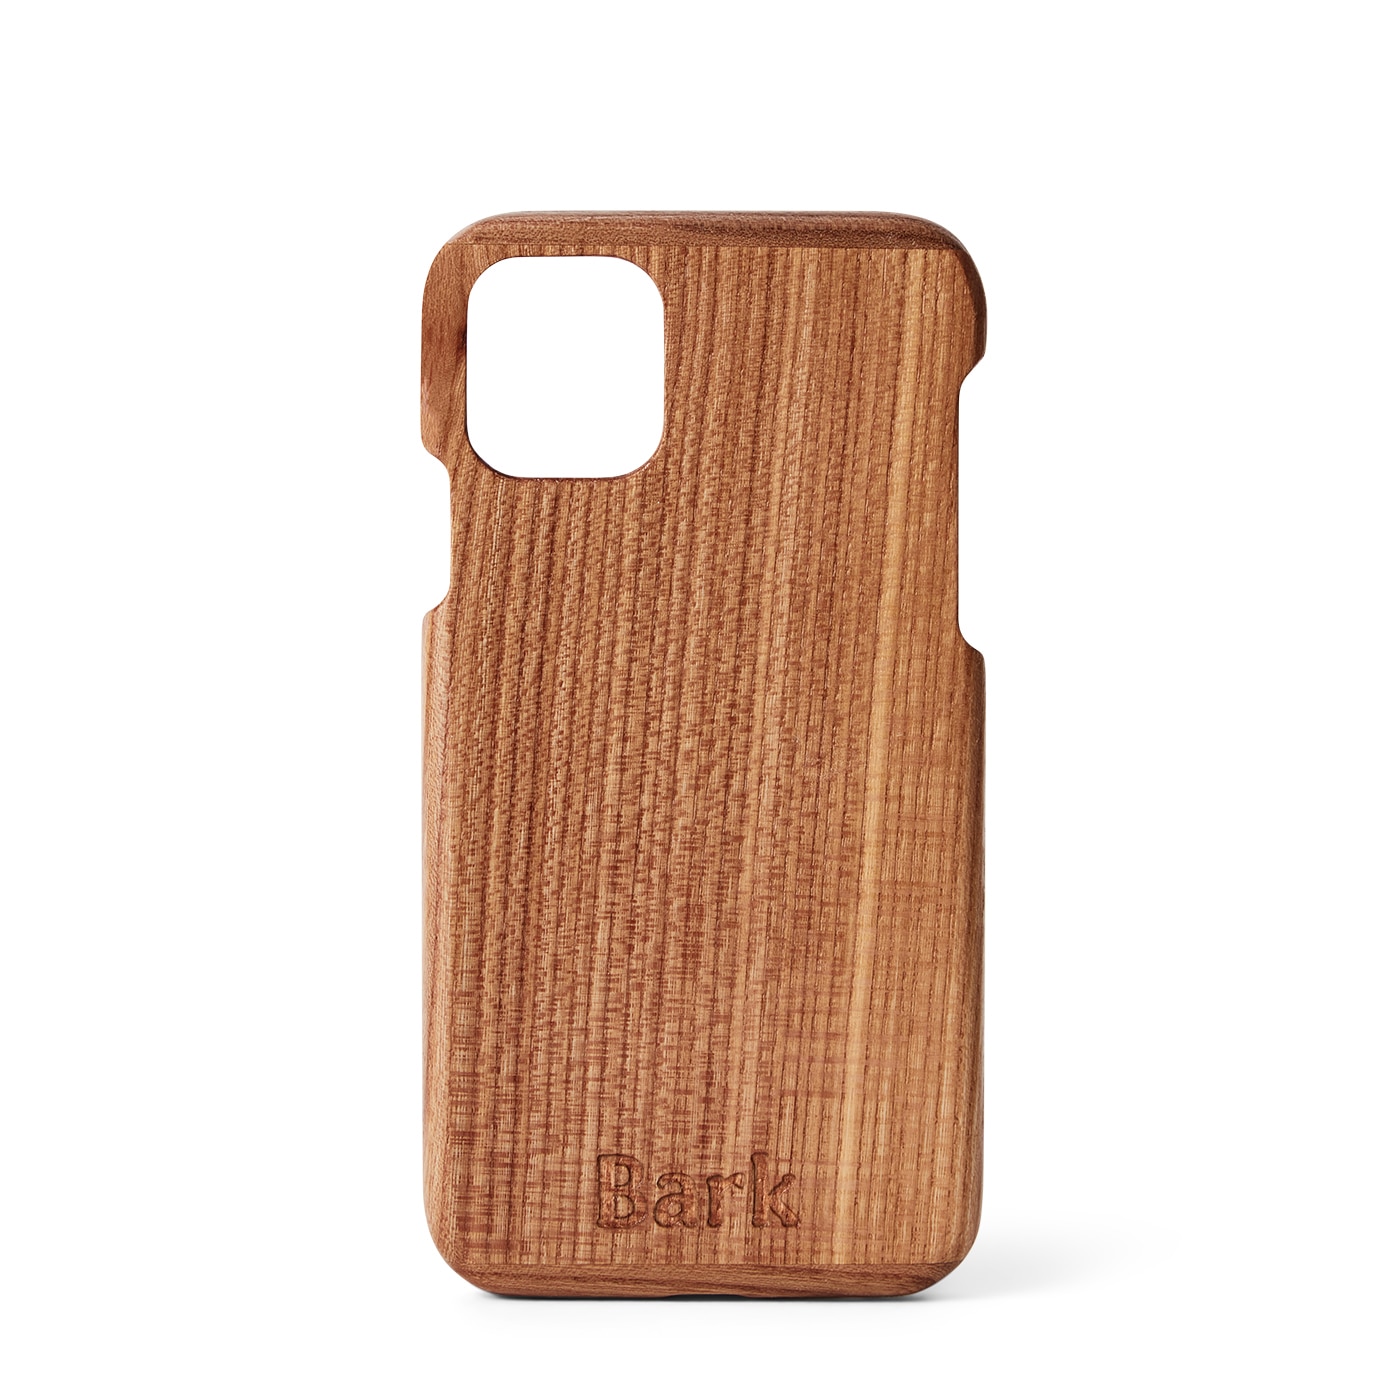 iPhone 11 case made of Swedish hardwood - Alm